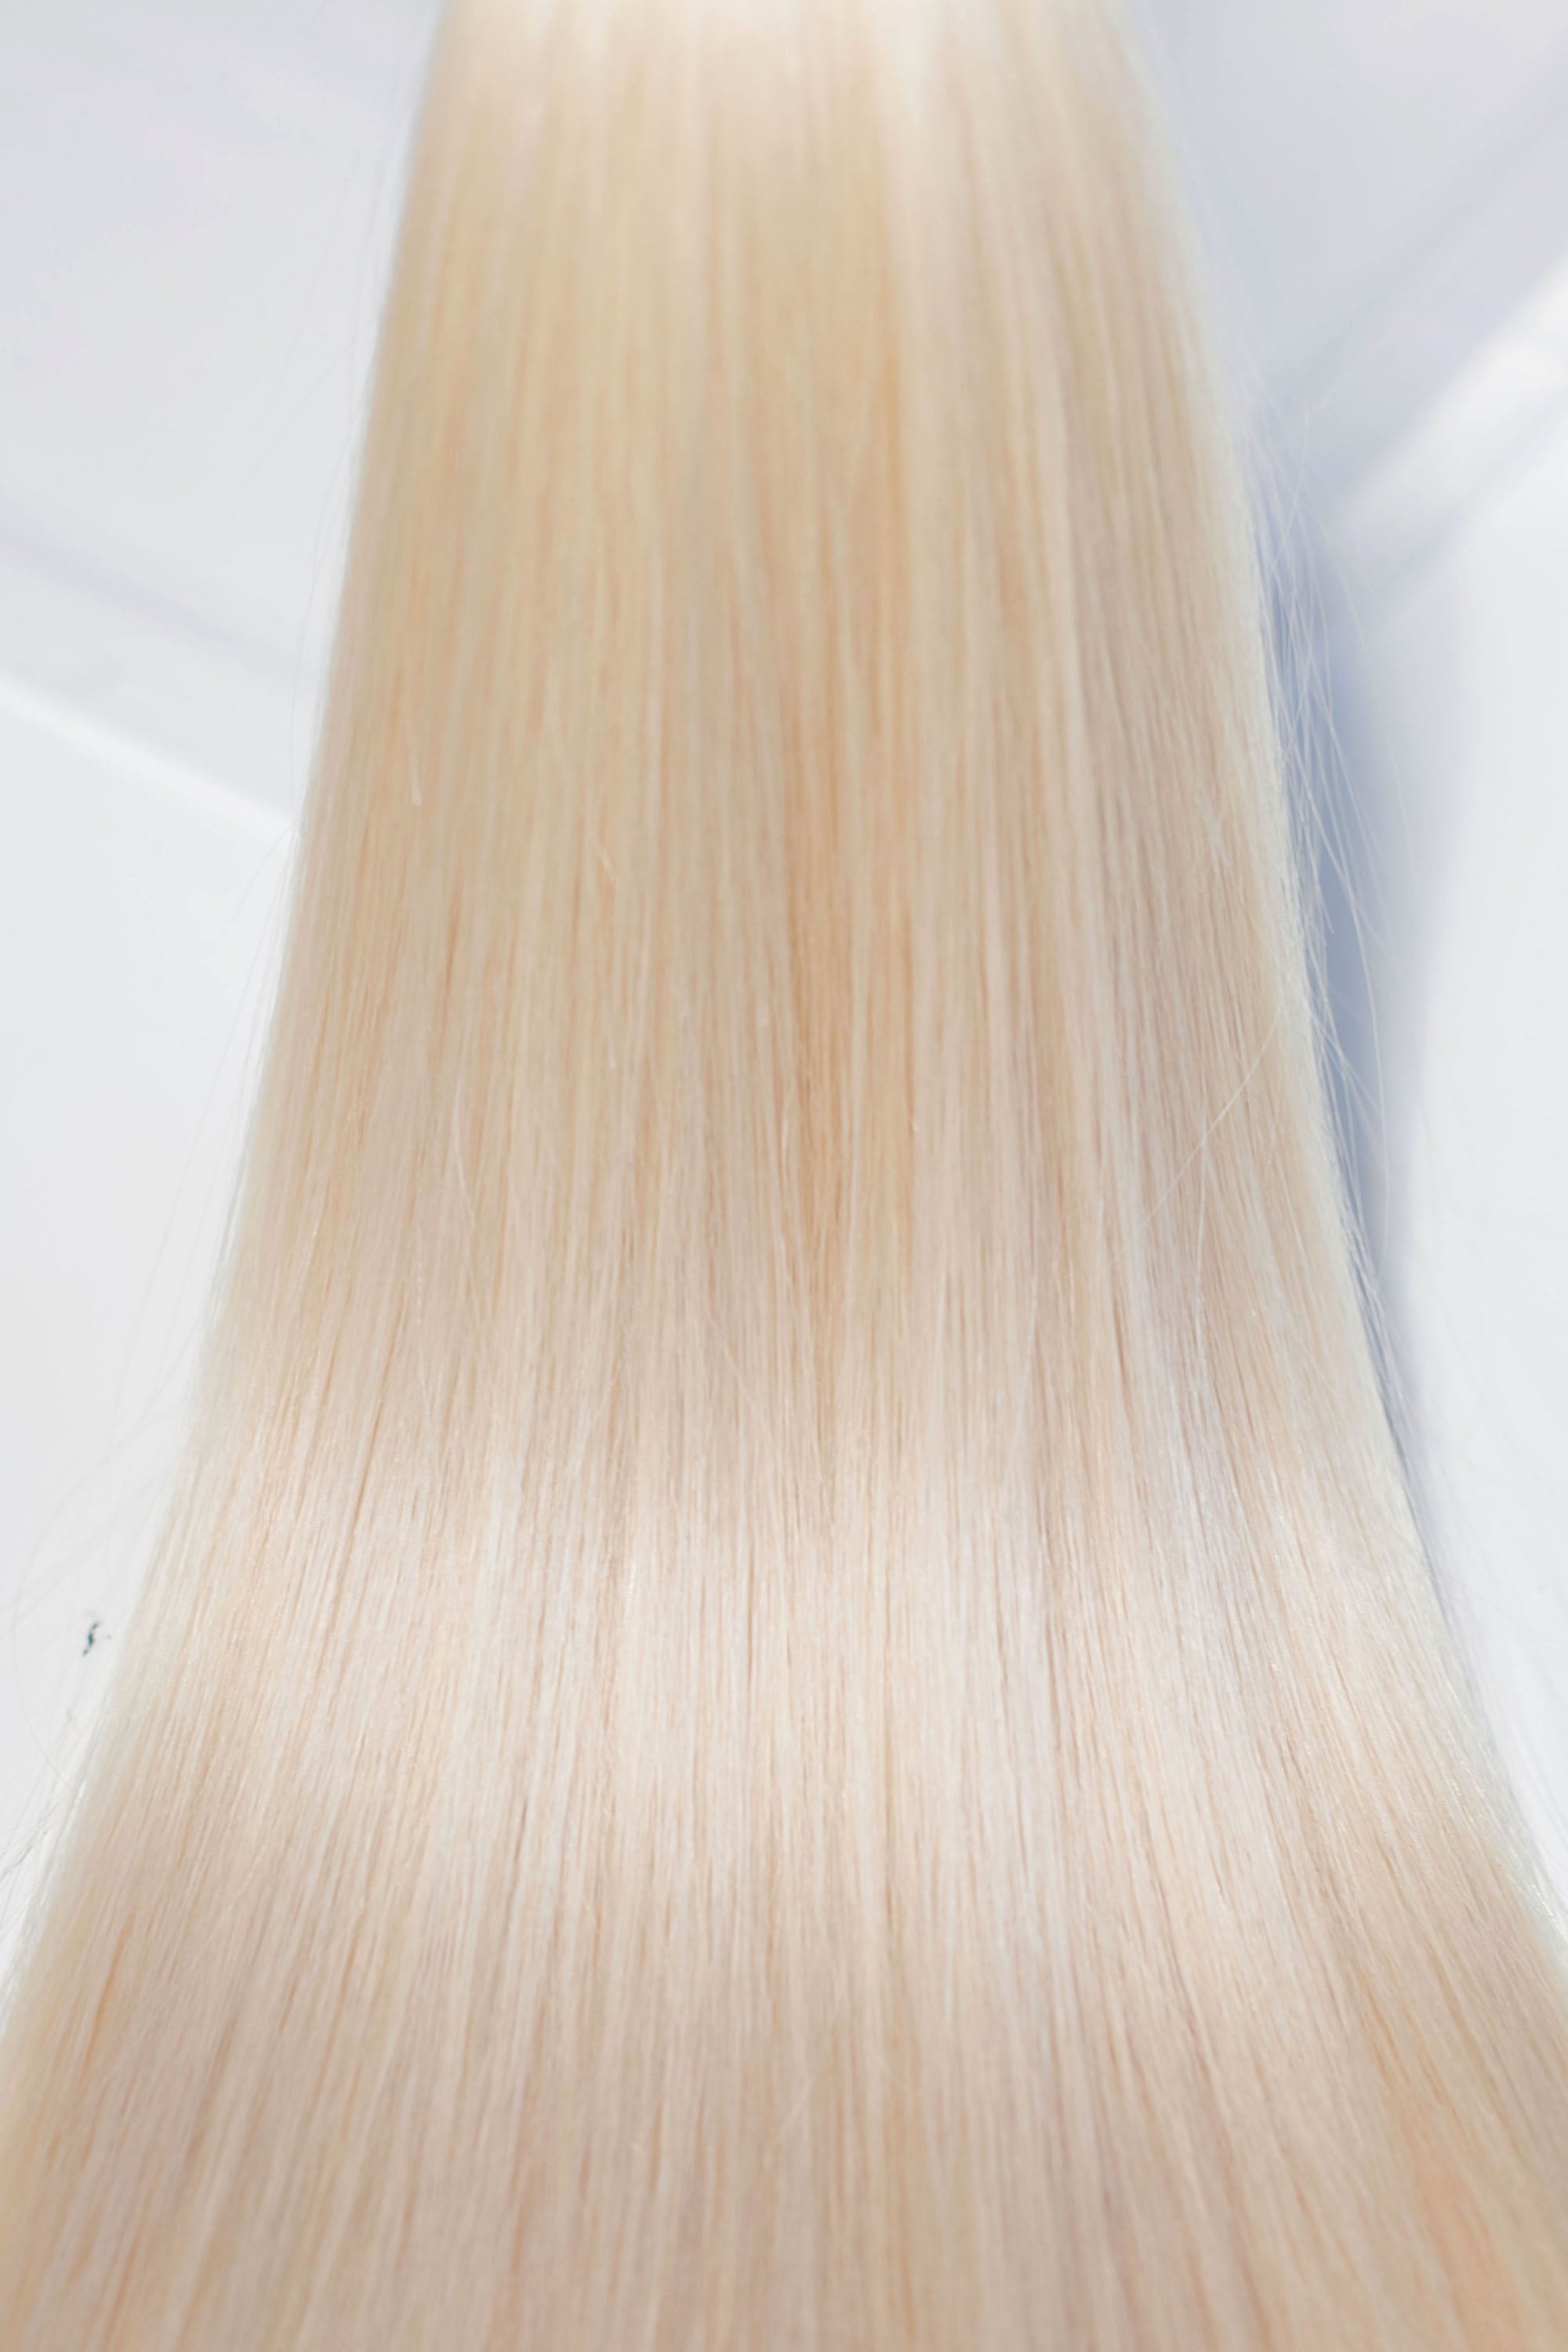 Behair professional Keratin Tip "Premium" 26" (65cm) Natural Straight Ice Blond #000 - 25g (Standart - 0.7g each pcs) hair extensions